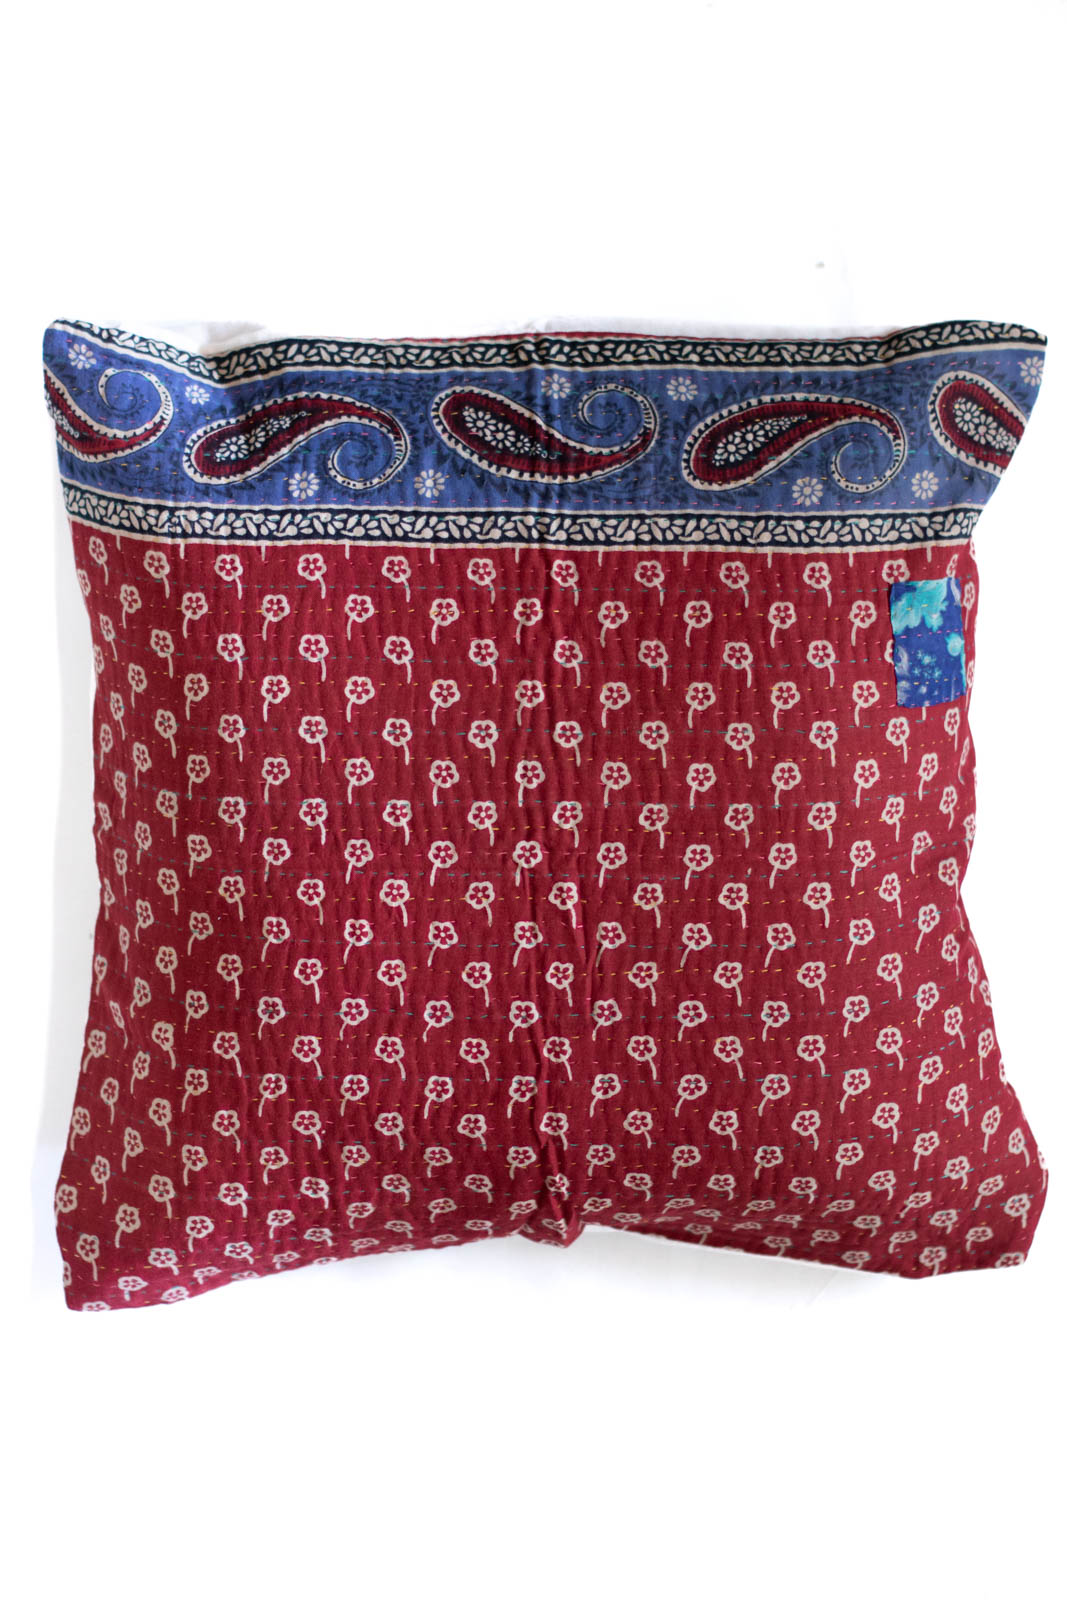 Extraordinary no. 3 Kantha Pillow Cover